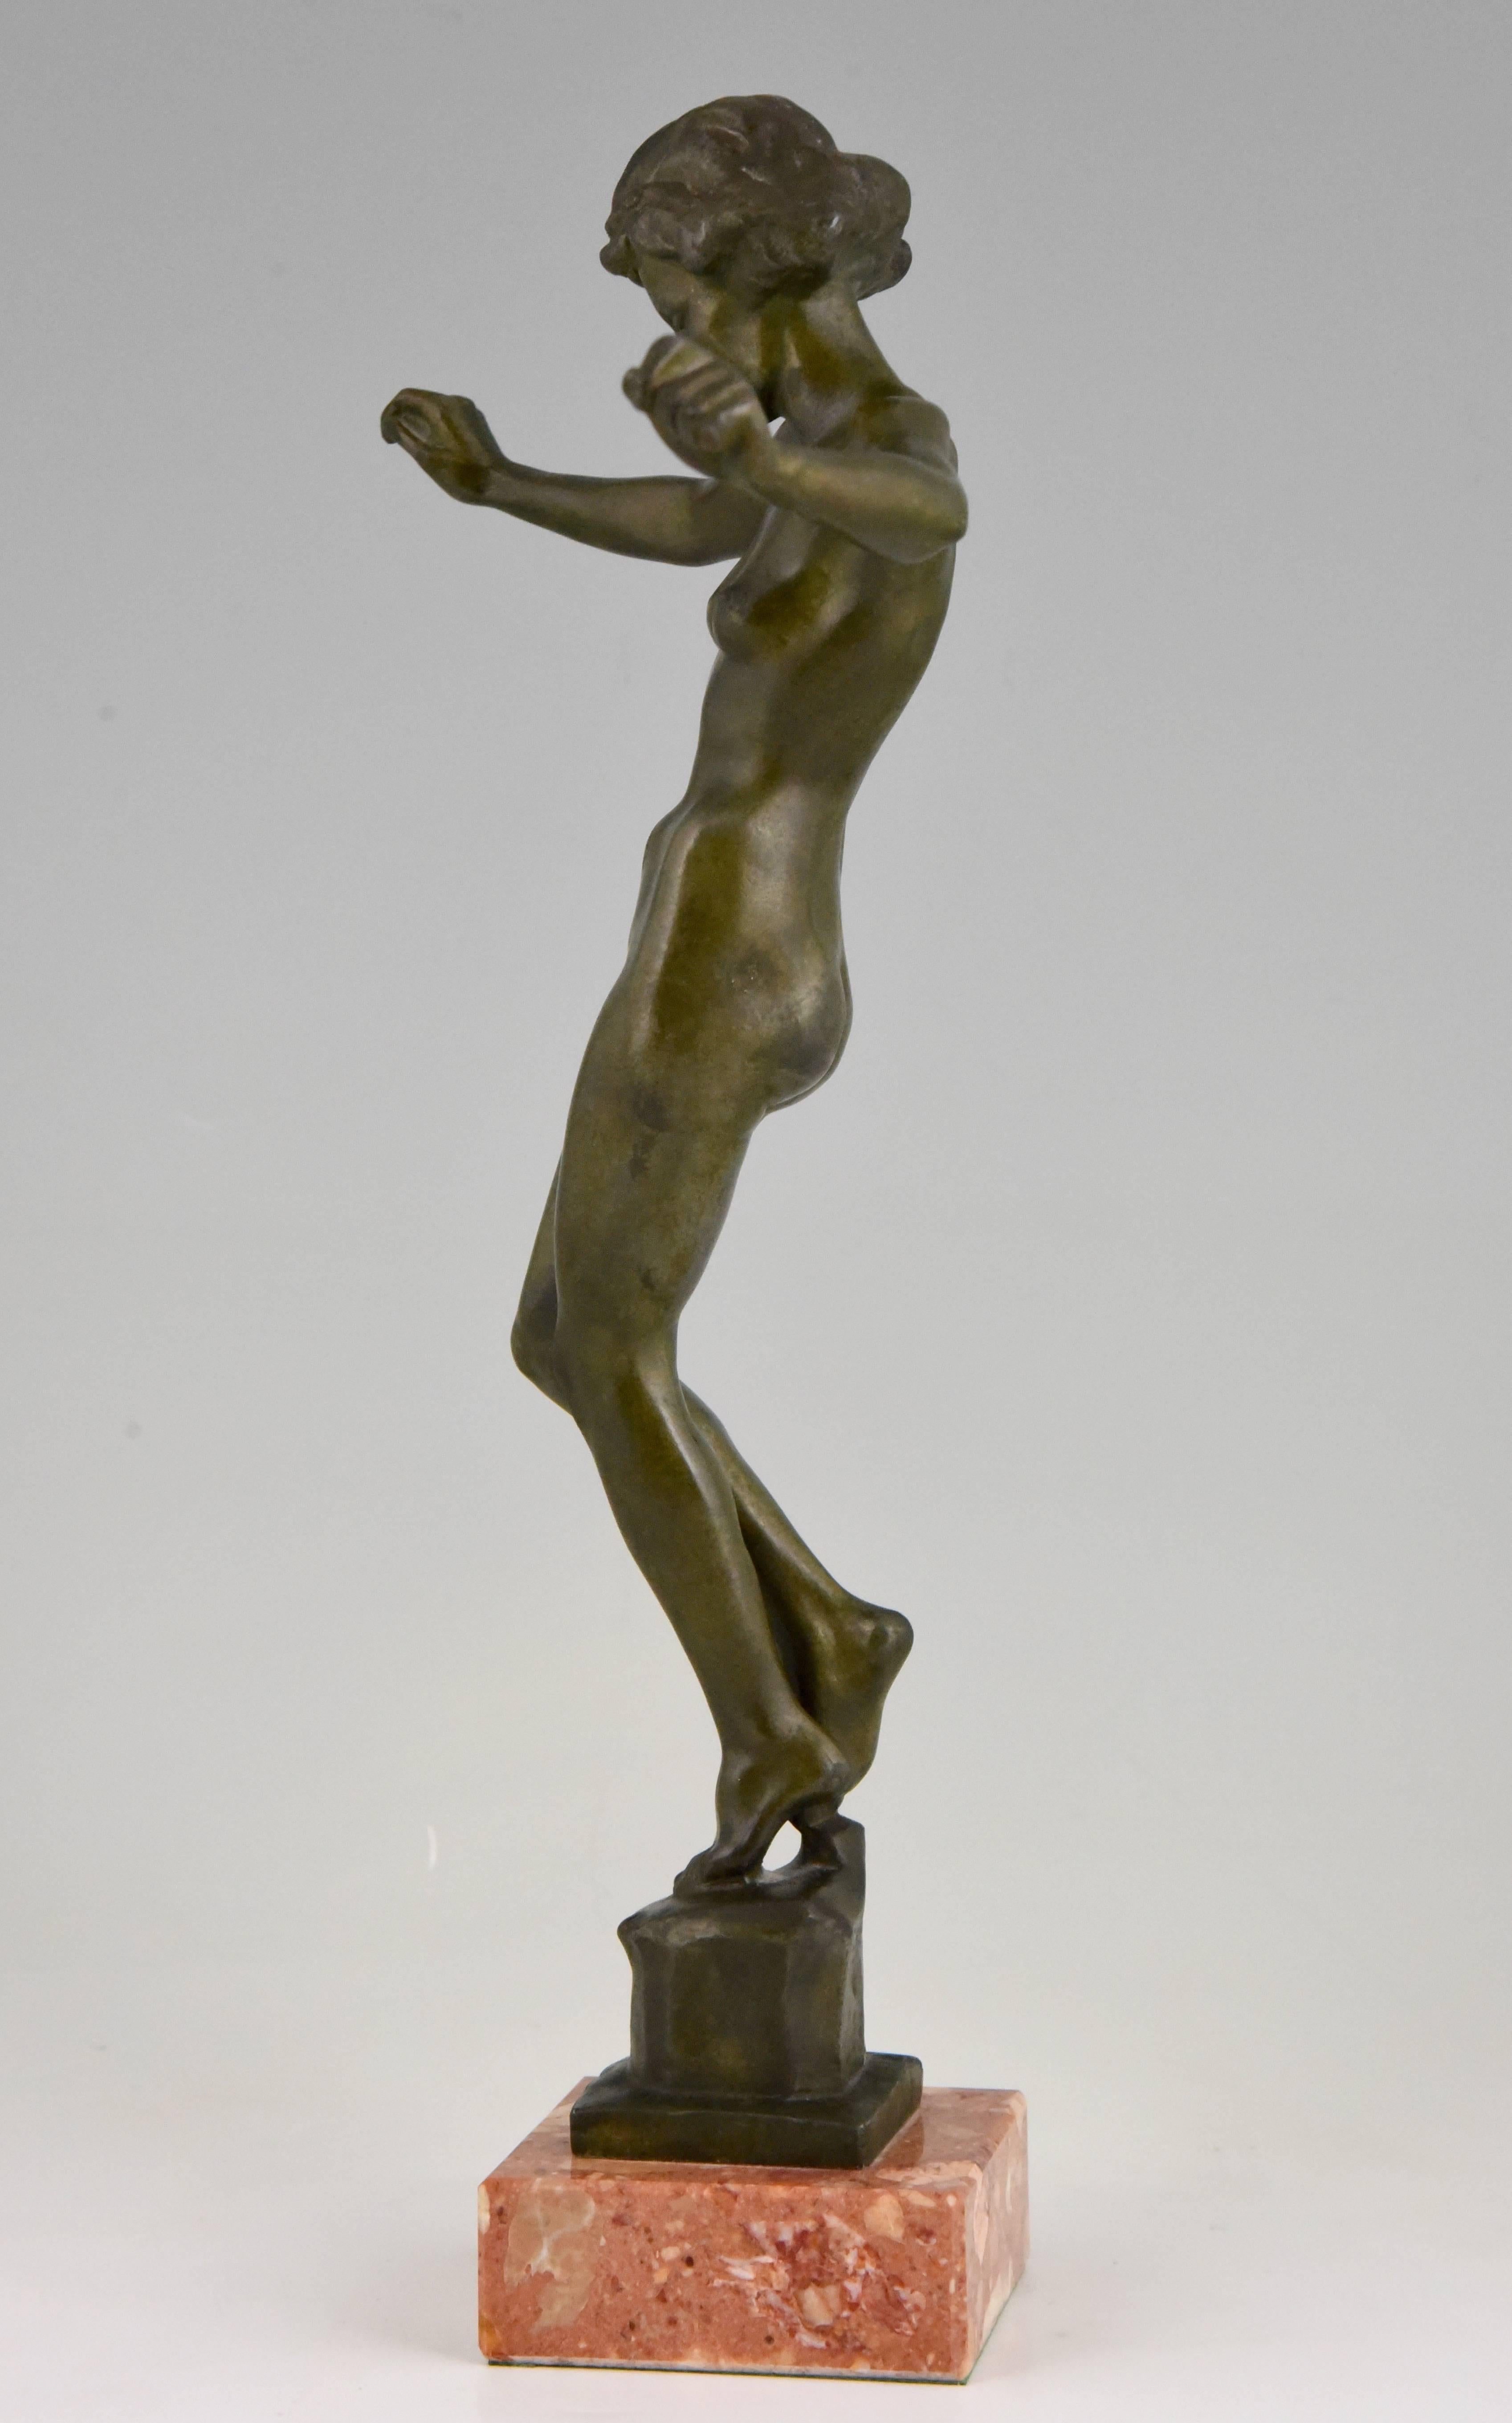 20th Century Art Deco Bronze Sculpture of a Nude Dancer David Fahrner, 1941